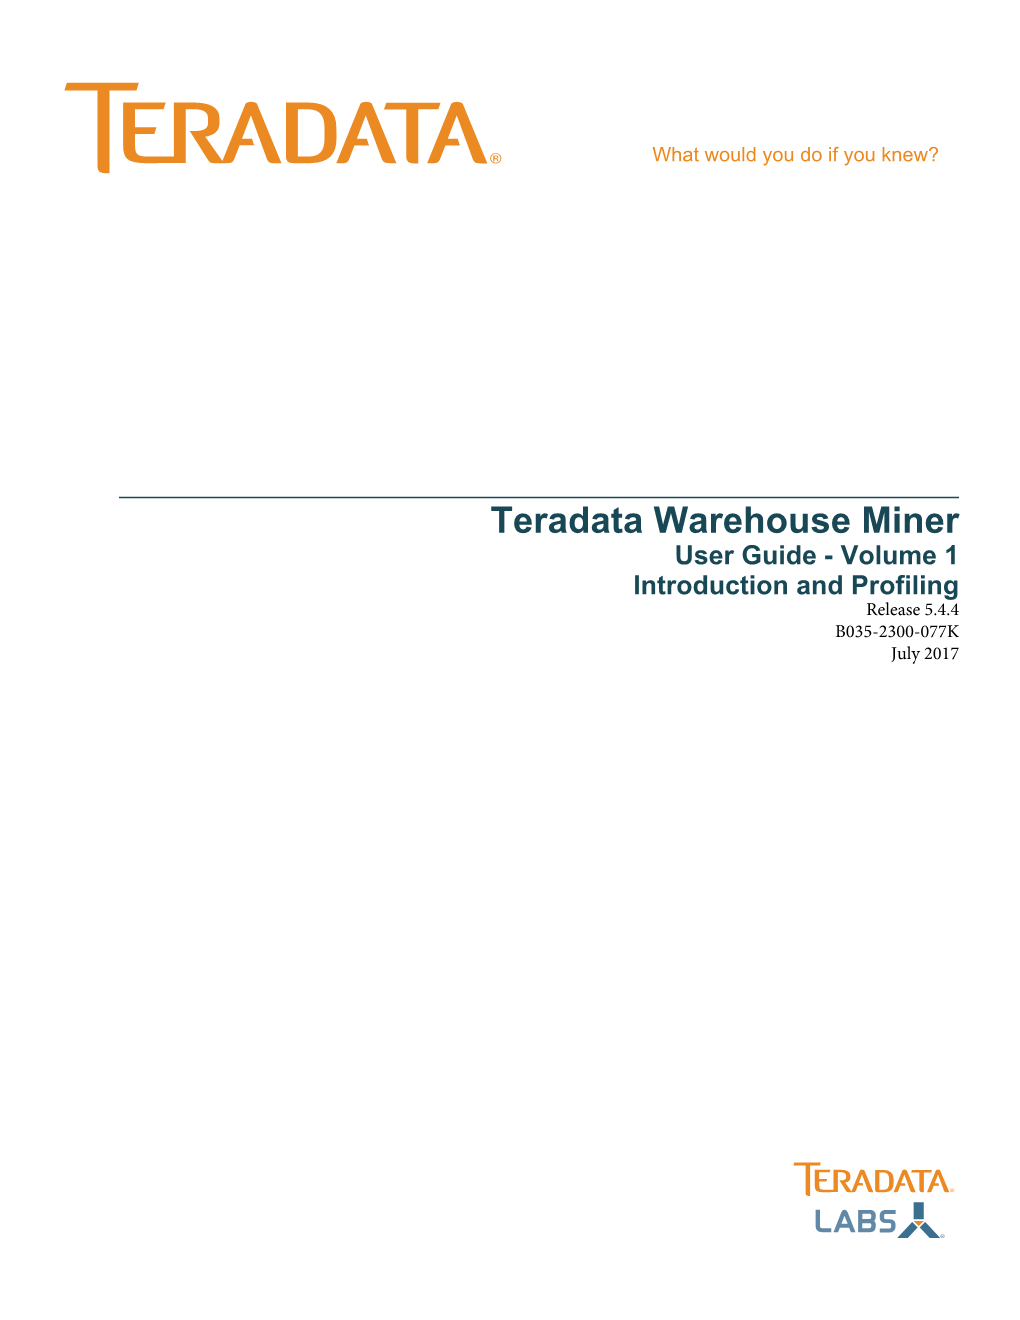 Teradata Warehouse Miner User Guide